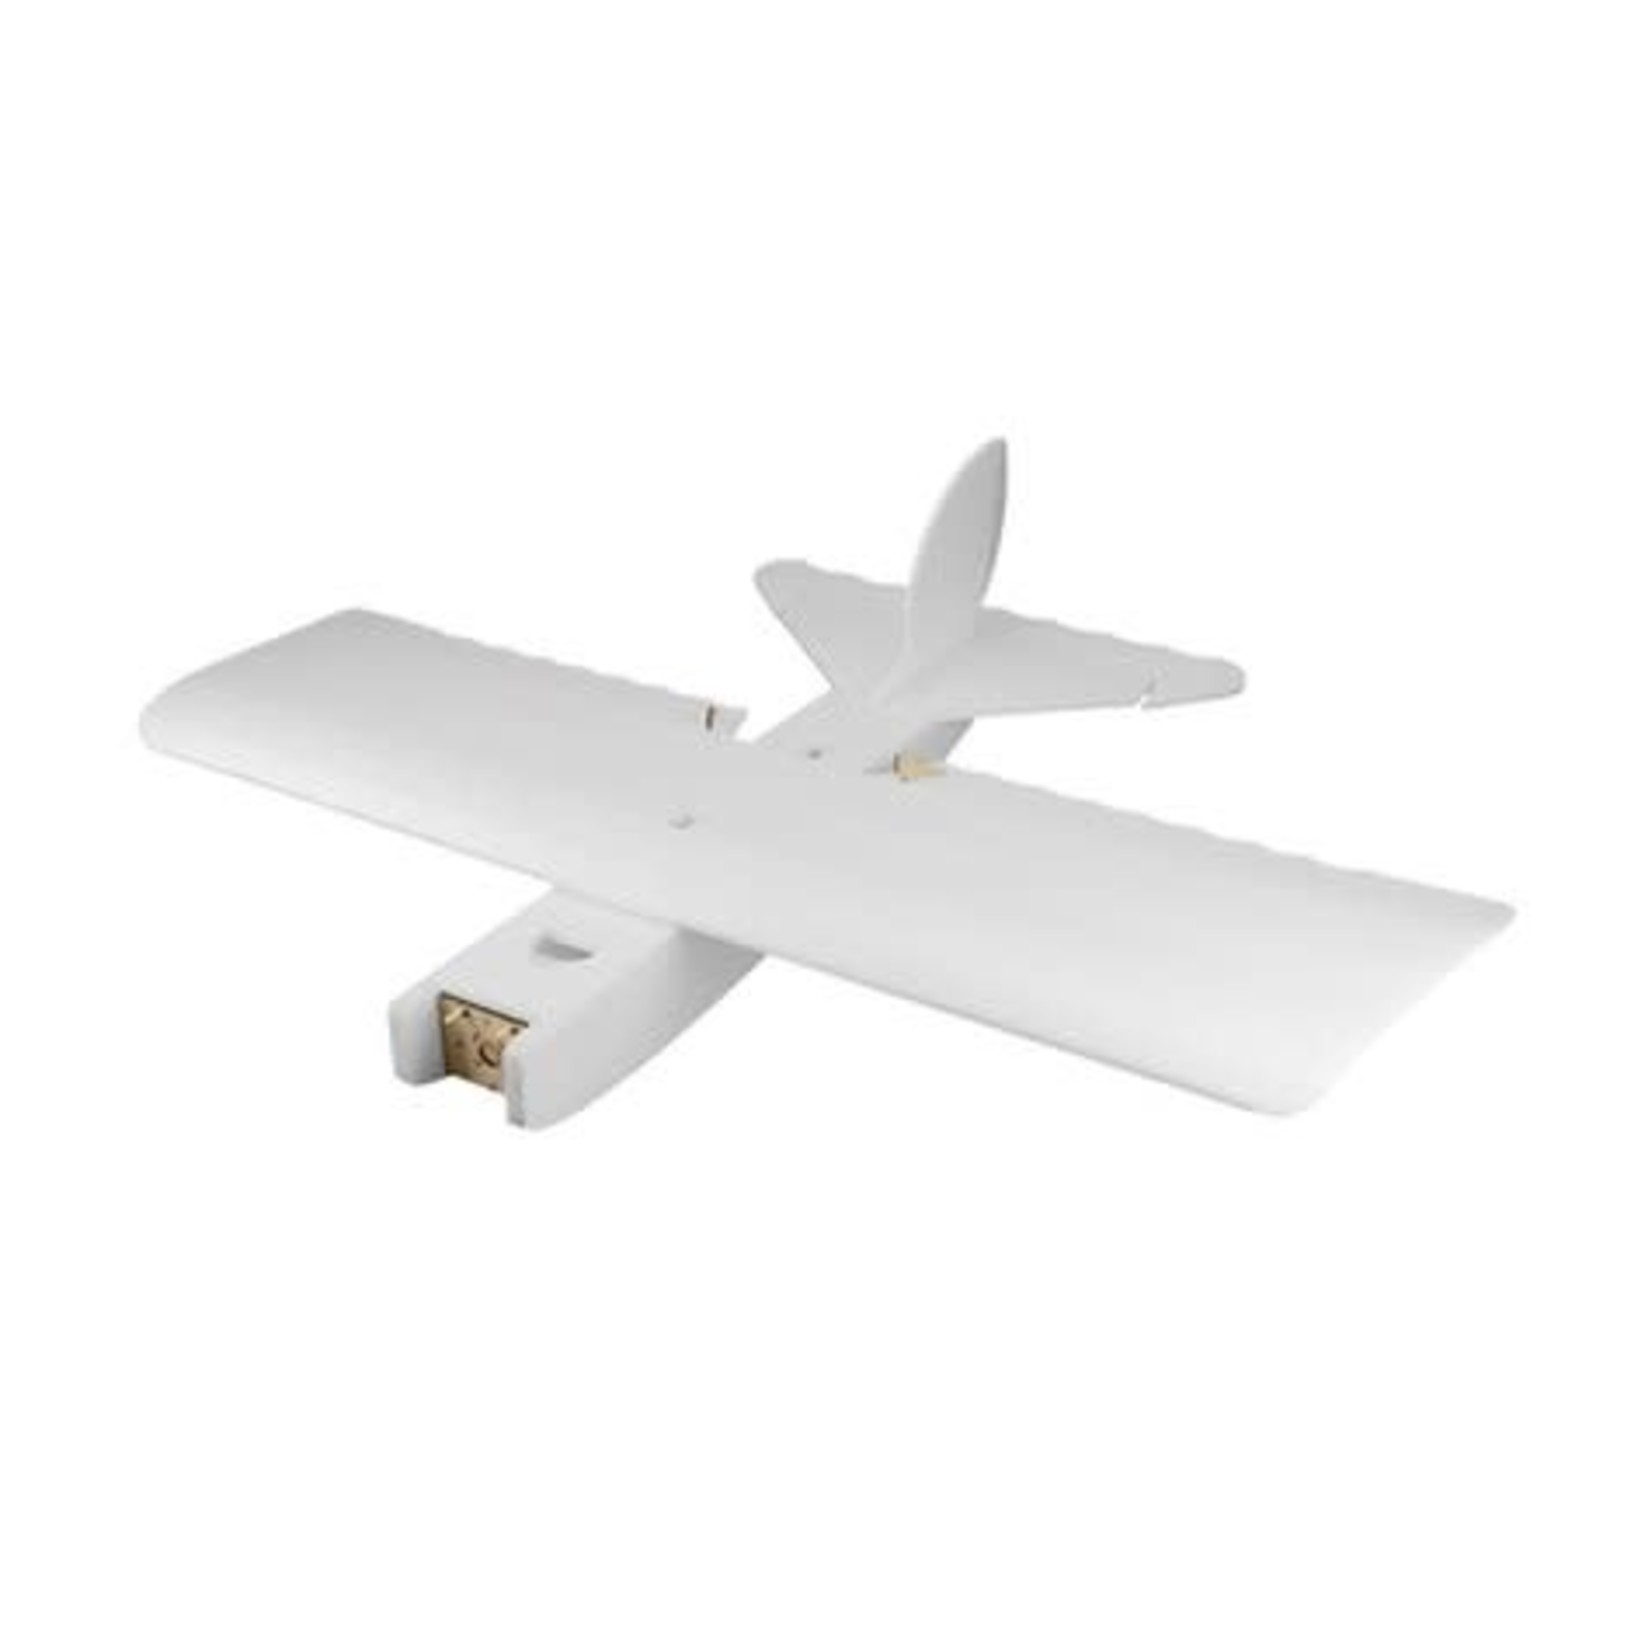 Flite Test Flite Test Bloody Baron Speed Build "Maker Foam" Electric Airplane Kit (737mm) #FLT-1025